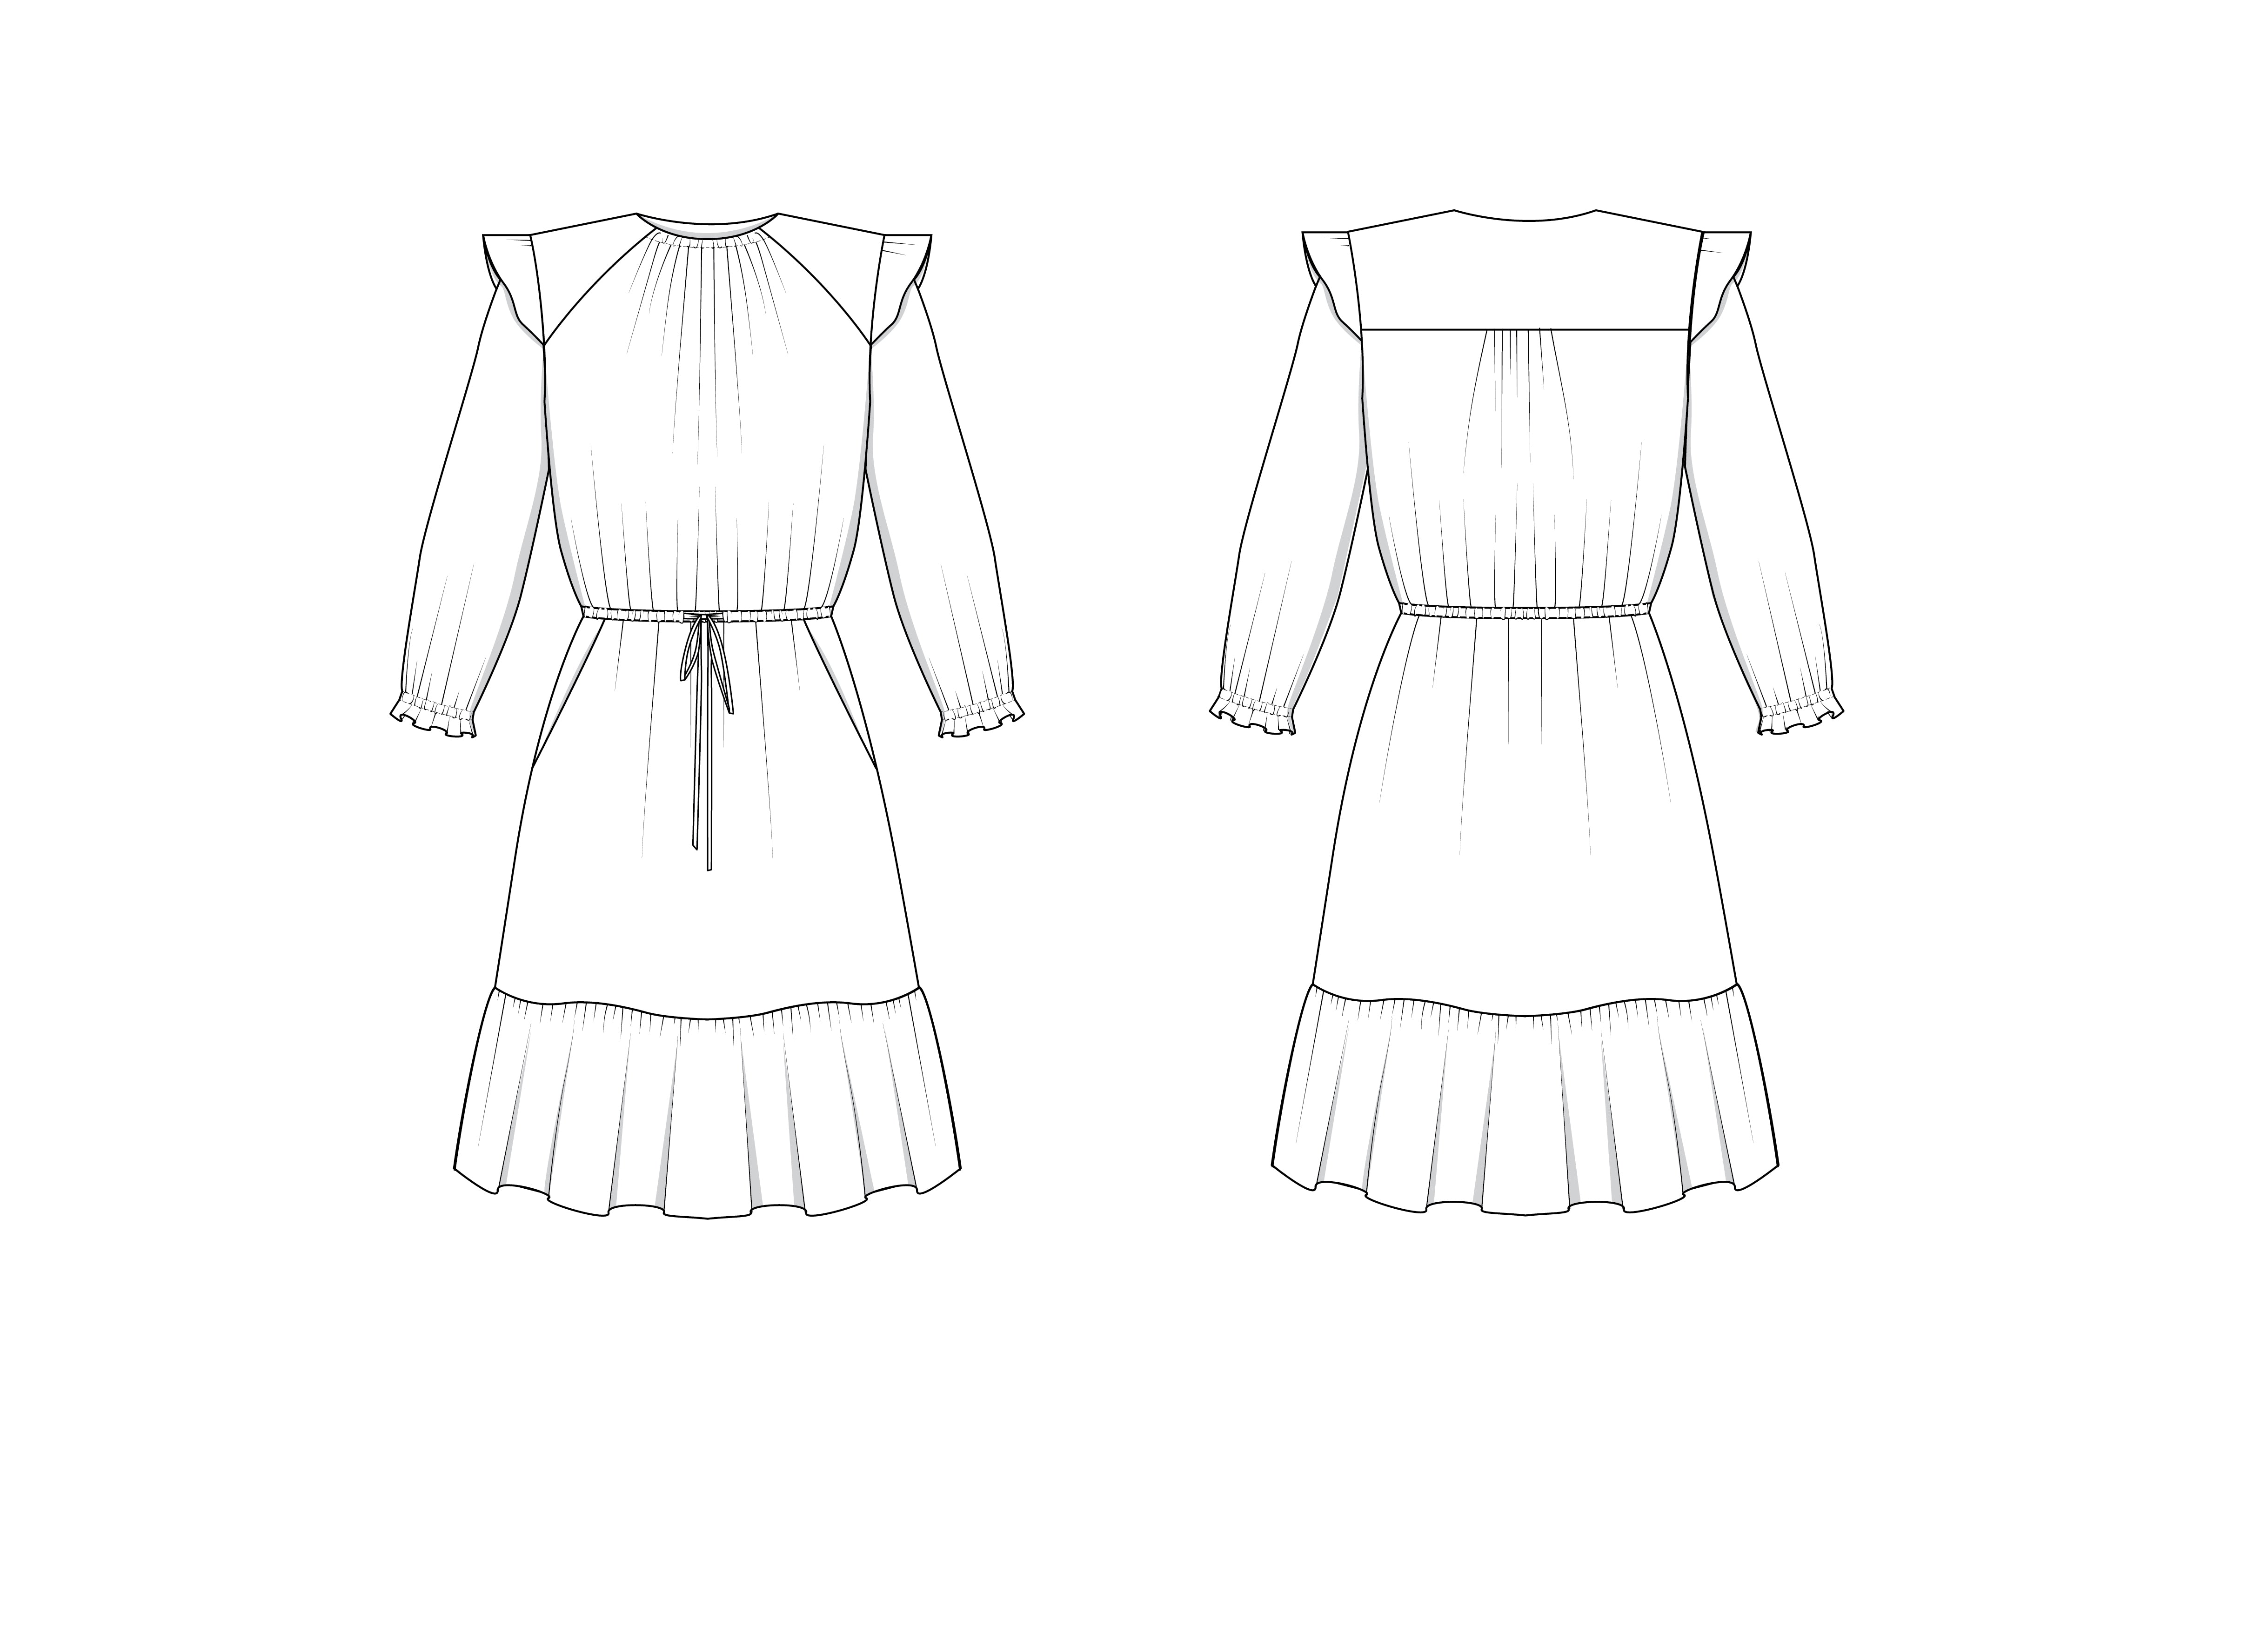 Davenport Dress - Printed Pattern